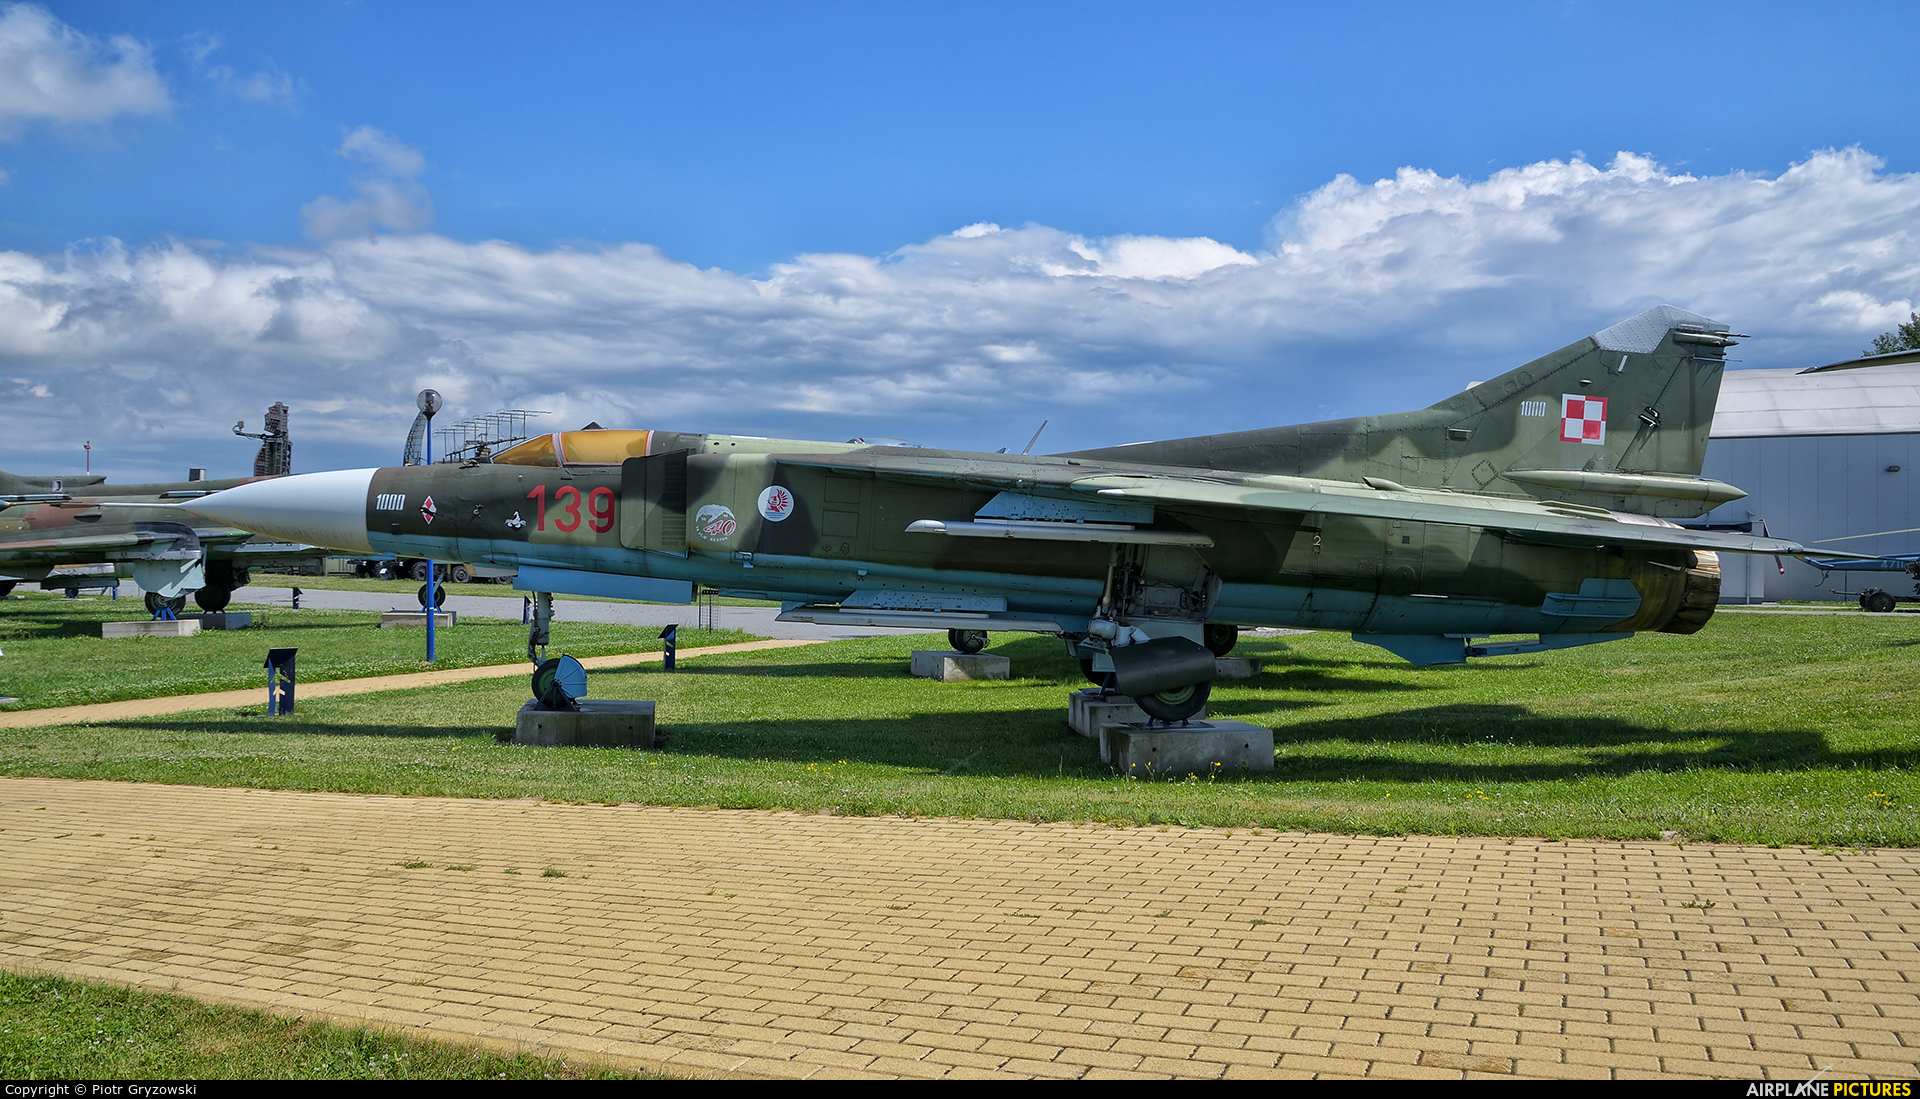 Poland - Air Force 139 aircraft at Dęblin - Museum of Polish Air Force